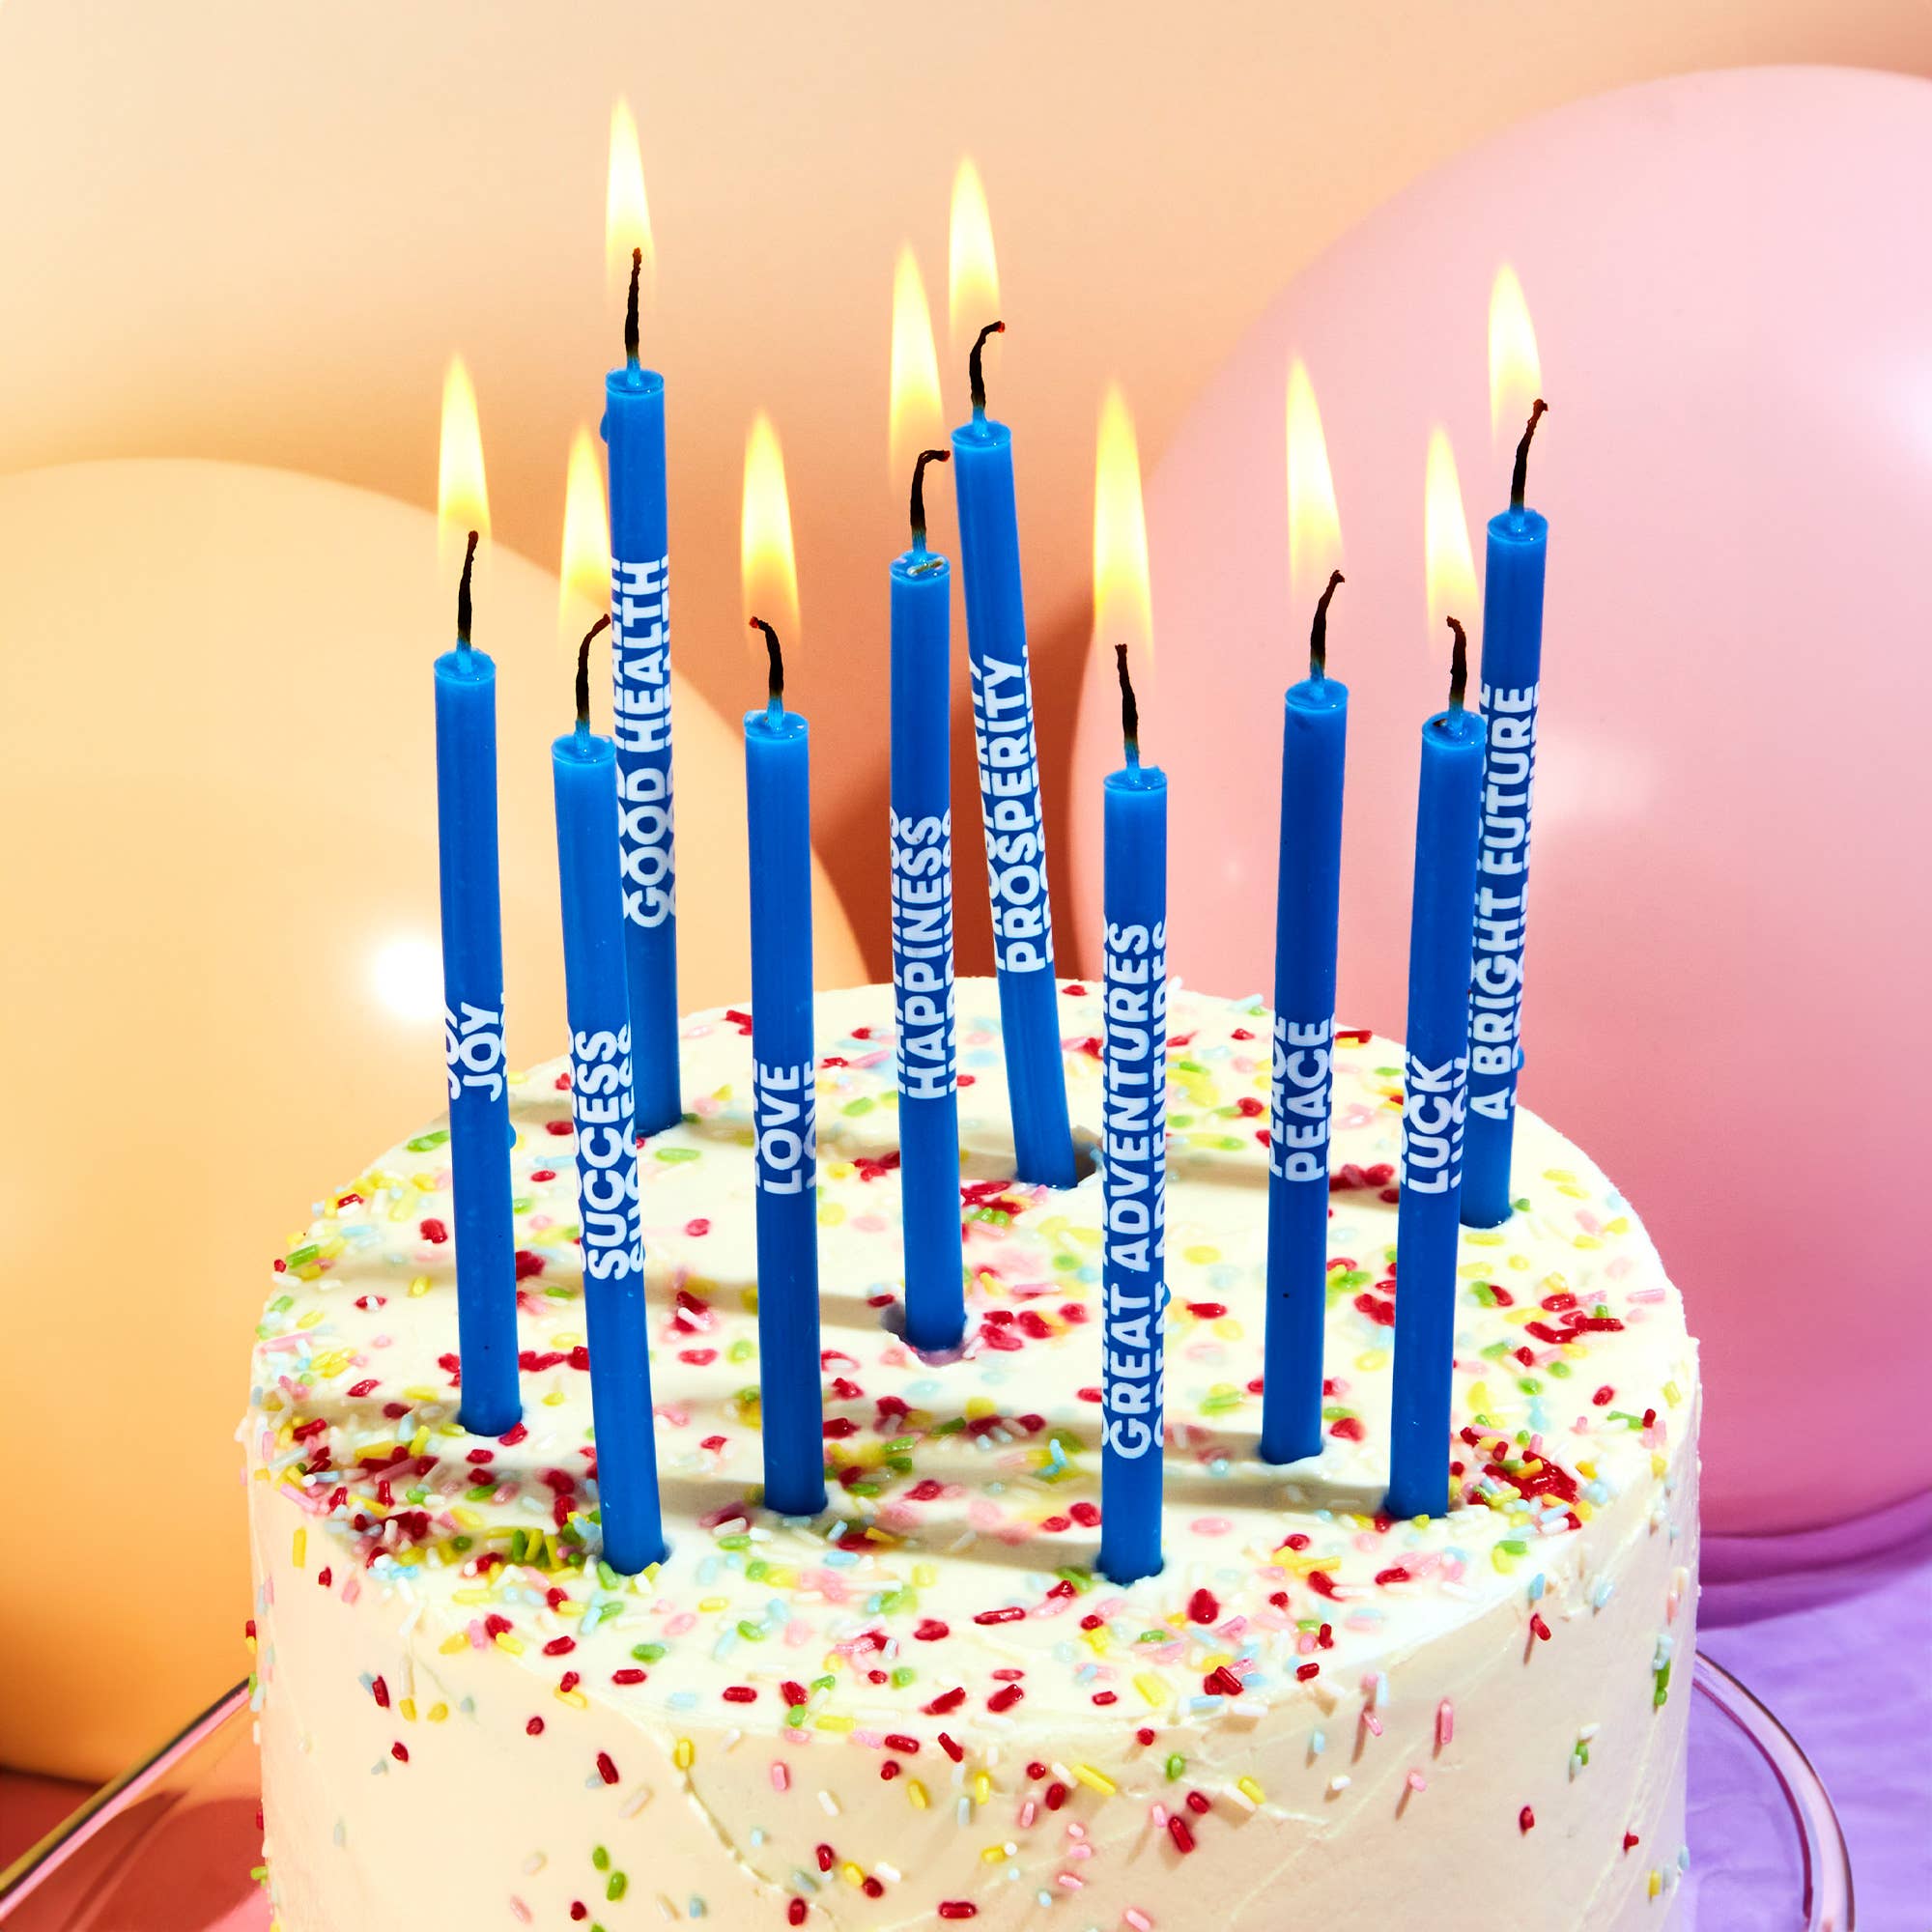 Wishing You Birthday Candles